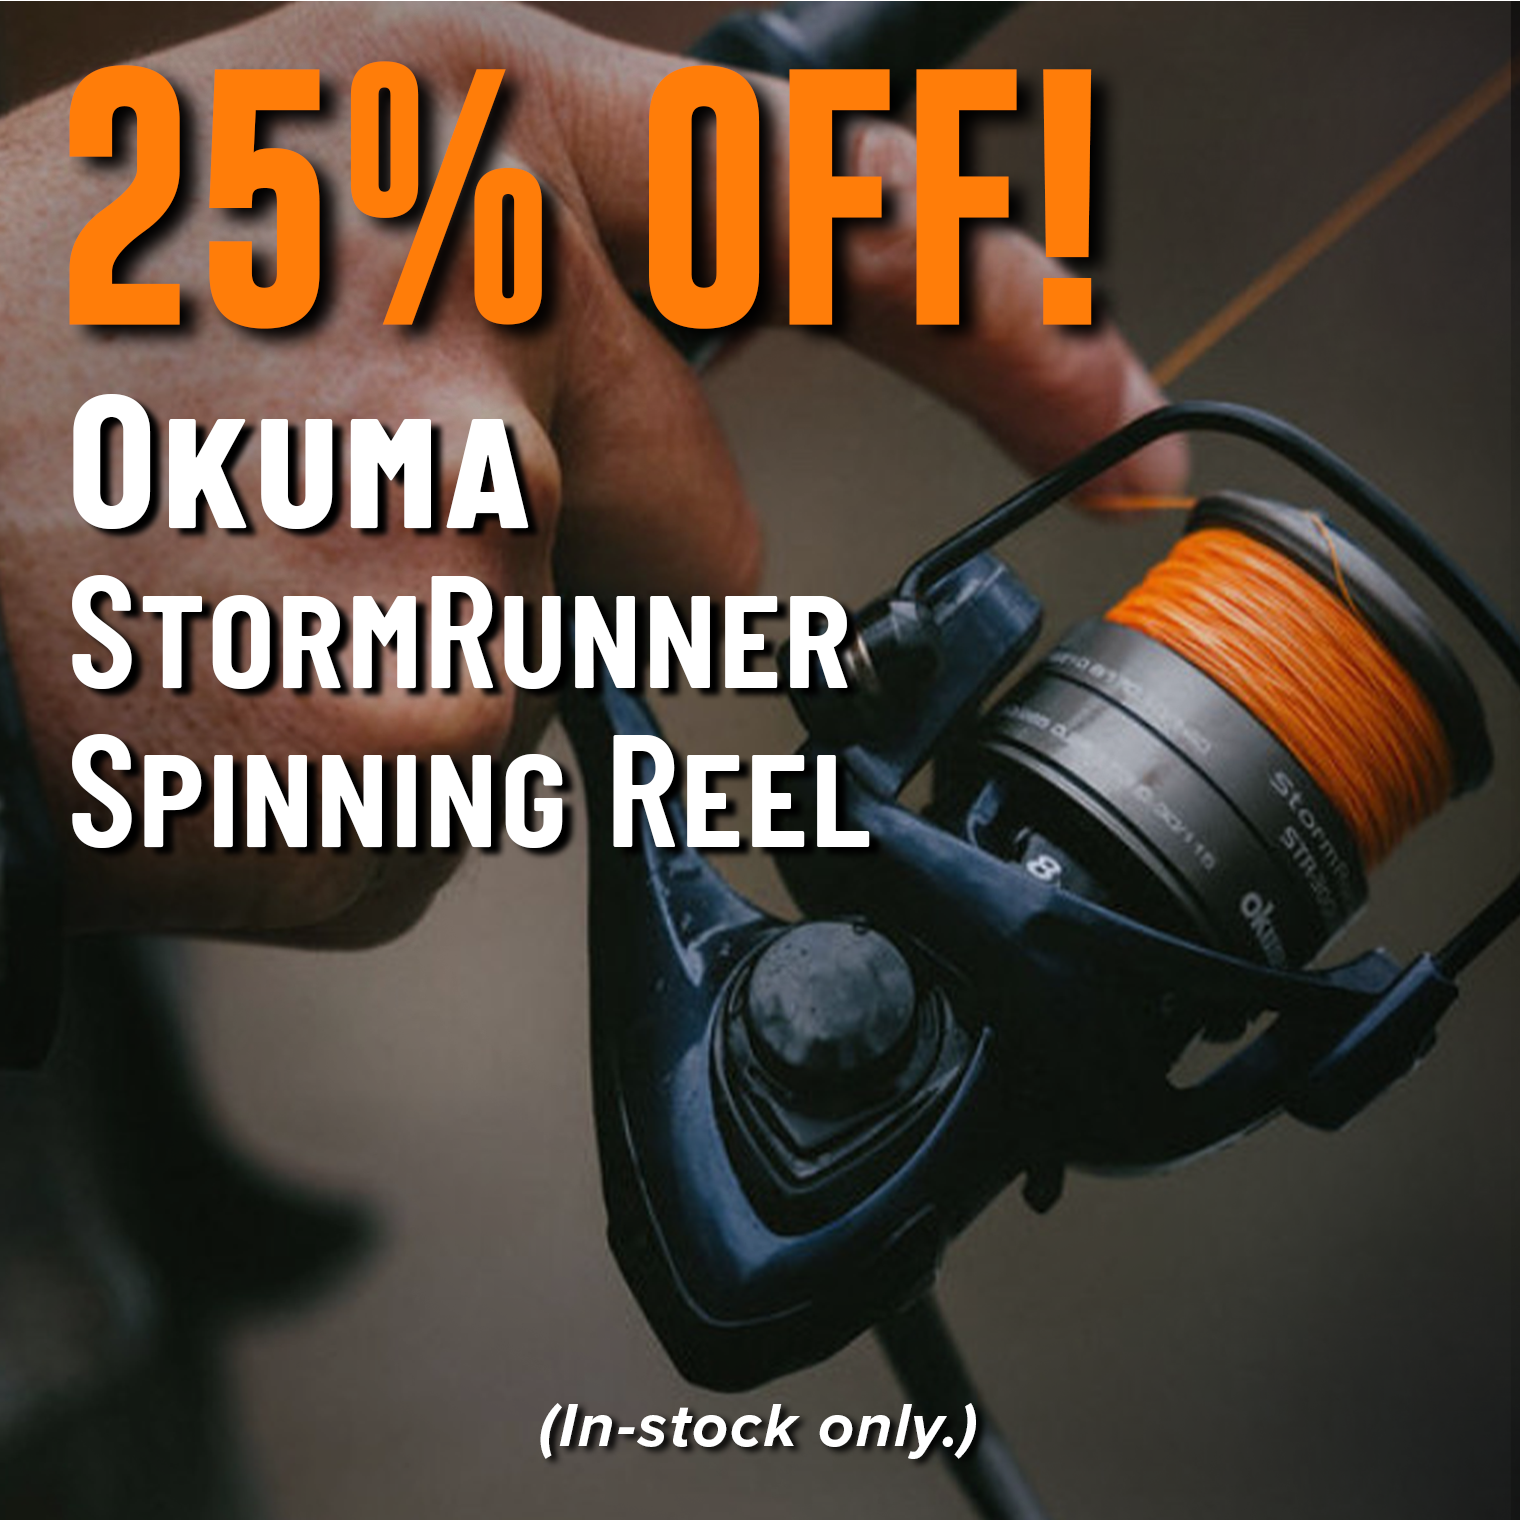 25% Off! Okuma StormRunner Spinning Reel (In-stock only.)